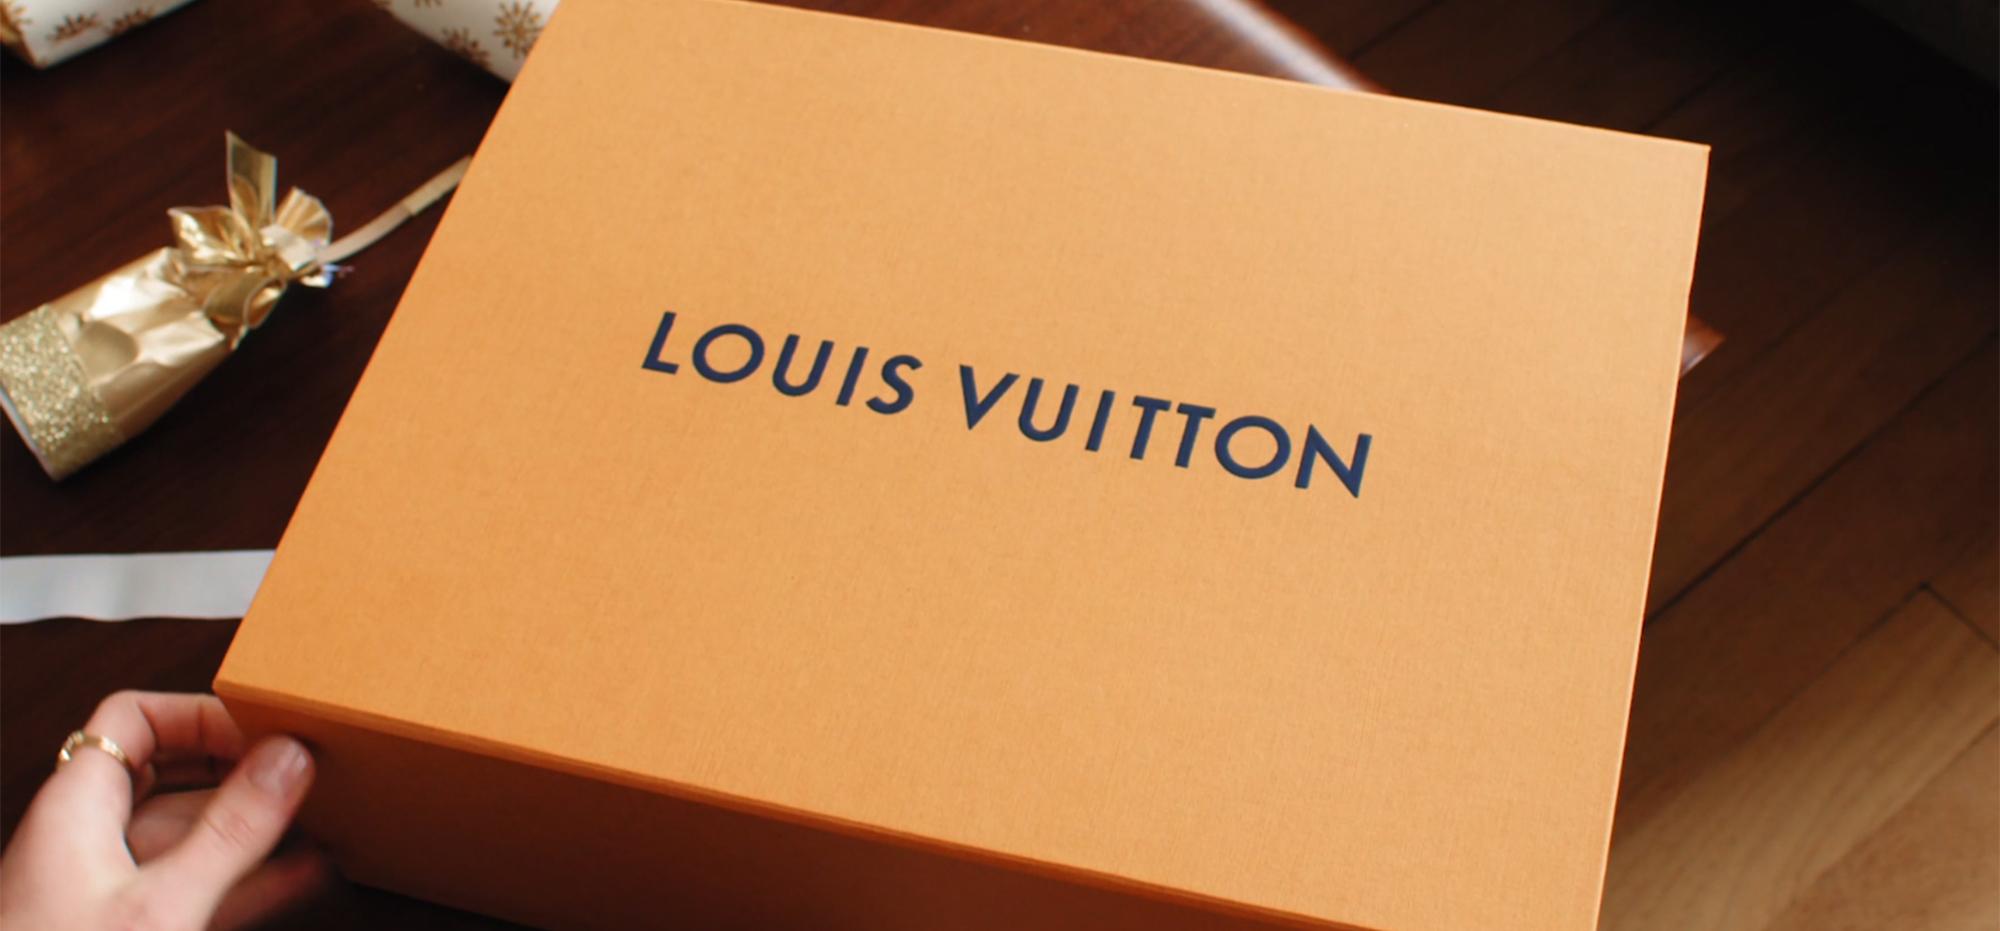 Unboxing LOUIS VUITTON Watch Packaging